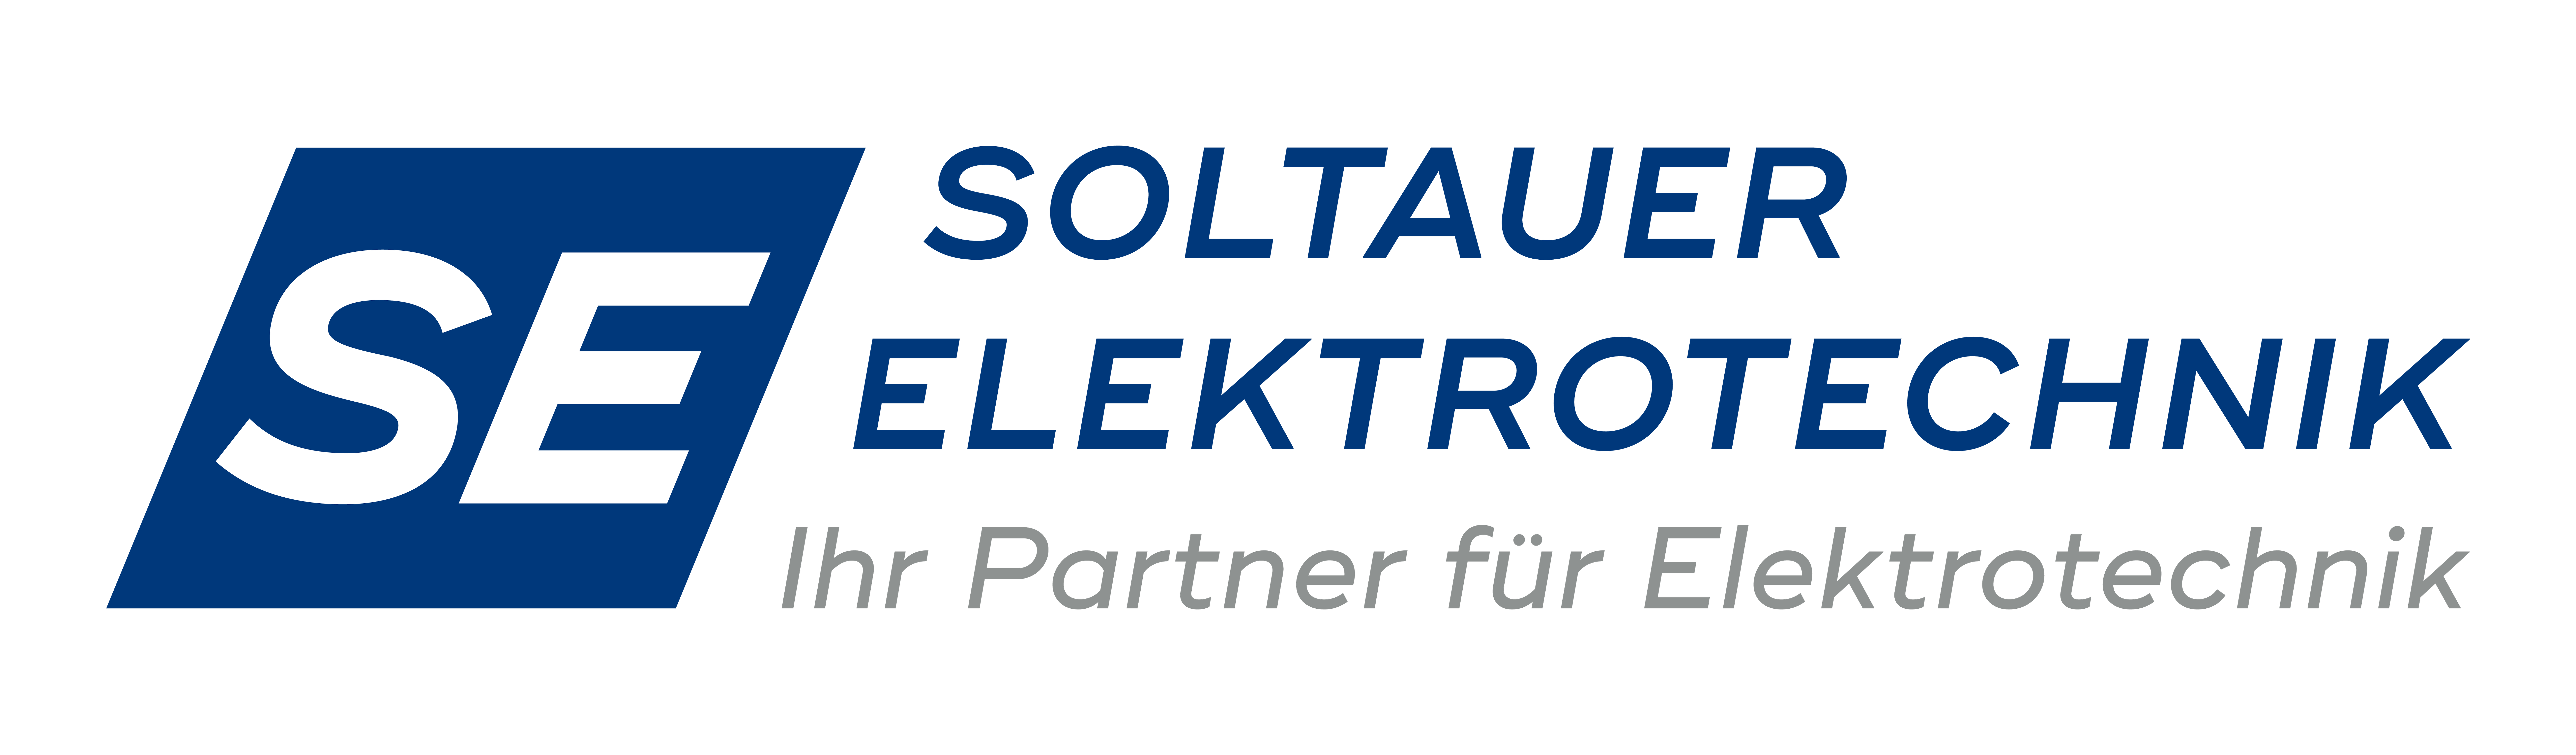 Soltauer Elektrotechnik GmbH